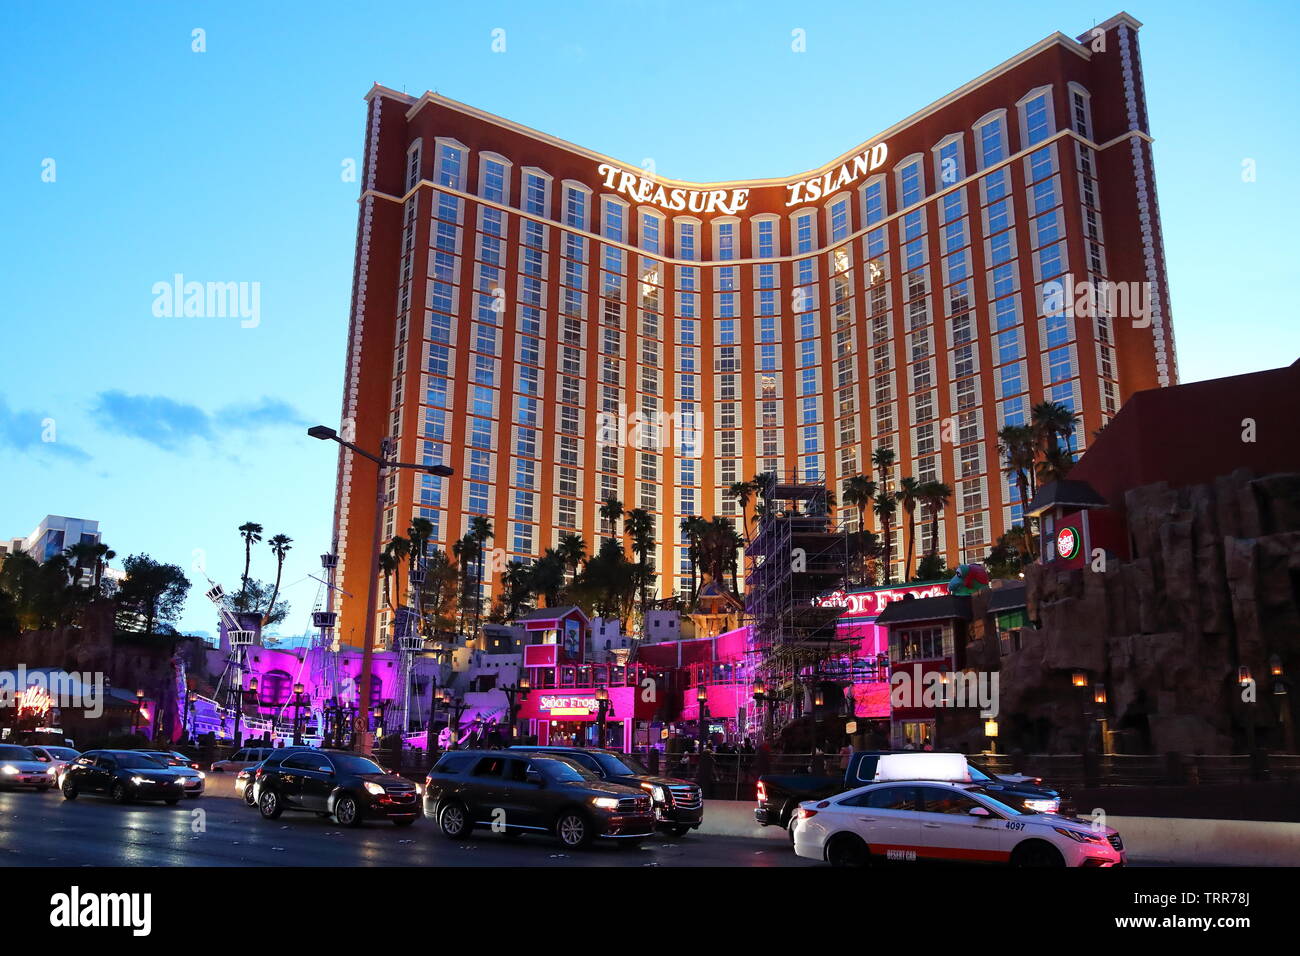 The Treasure Island hotel and casino in the evening in Las Vegas, Nevada, USA Stock Photo